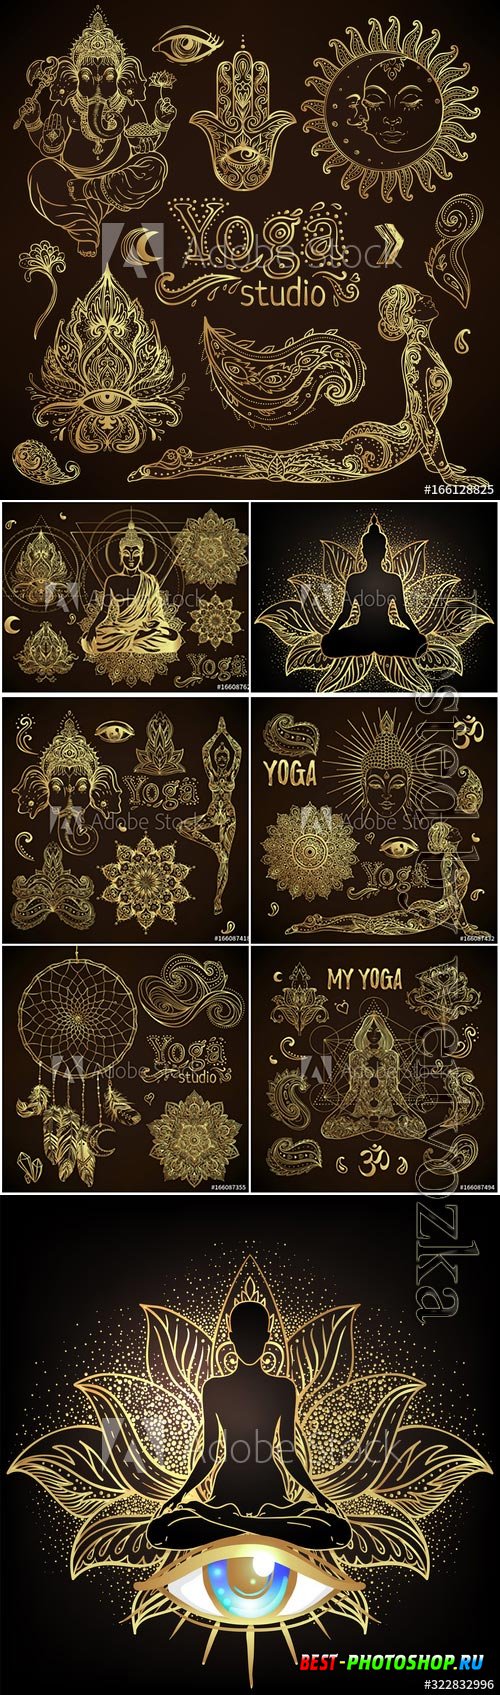 Yoga, meditation vector illustration set, hindu paisley motifs, Buddha silhouette